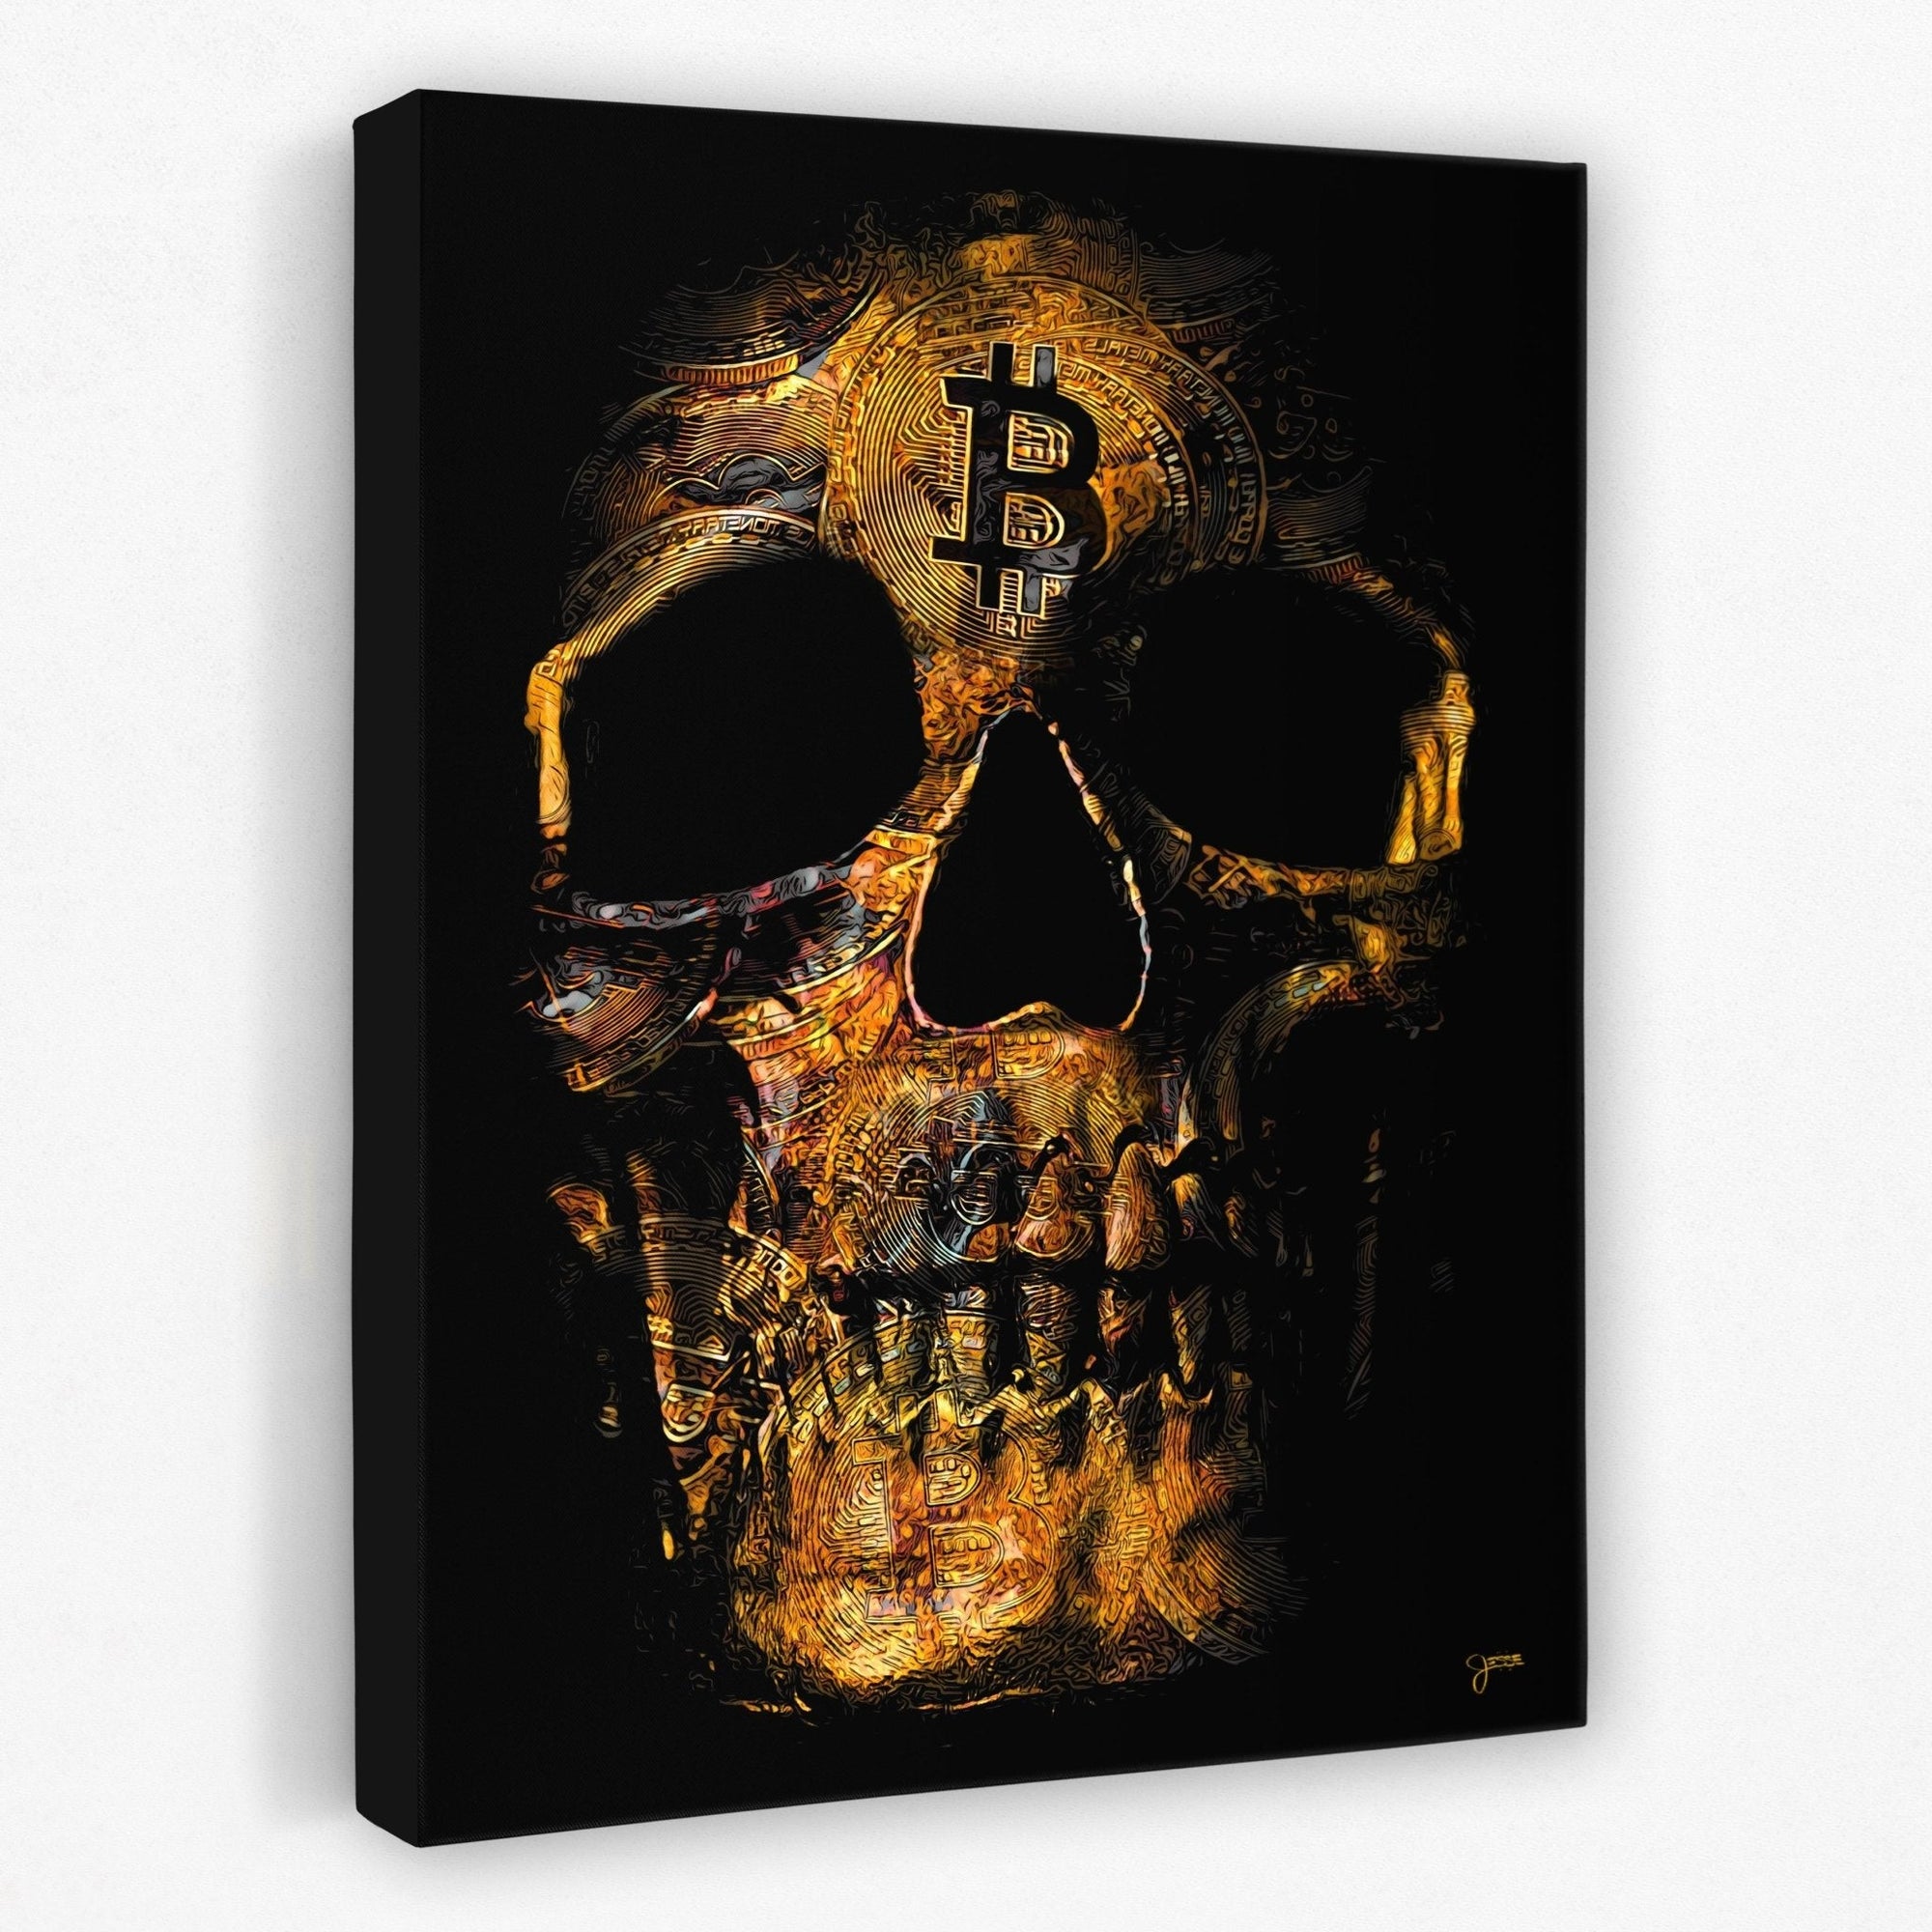 Bitcoin $kull - Thedopeart Canvas